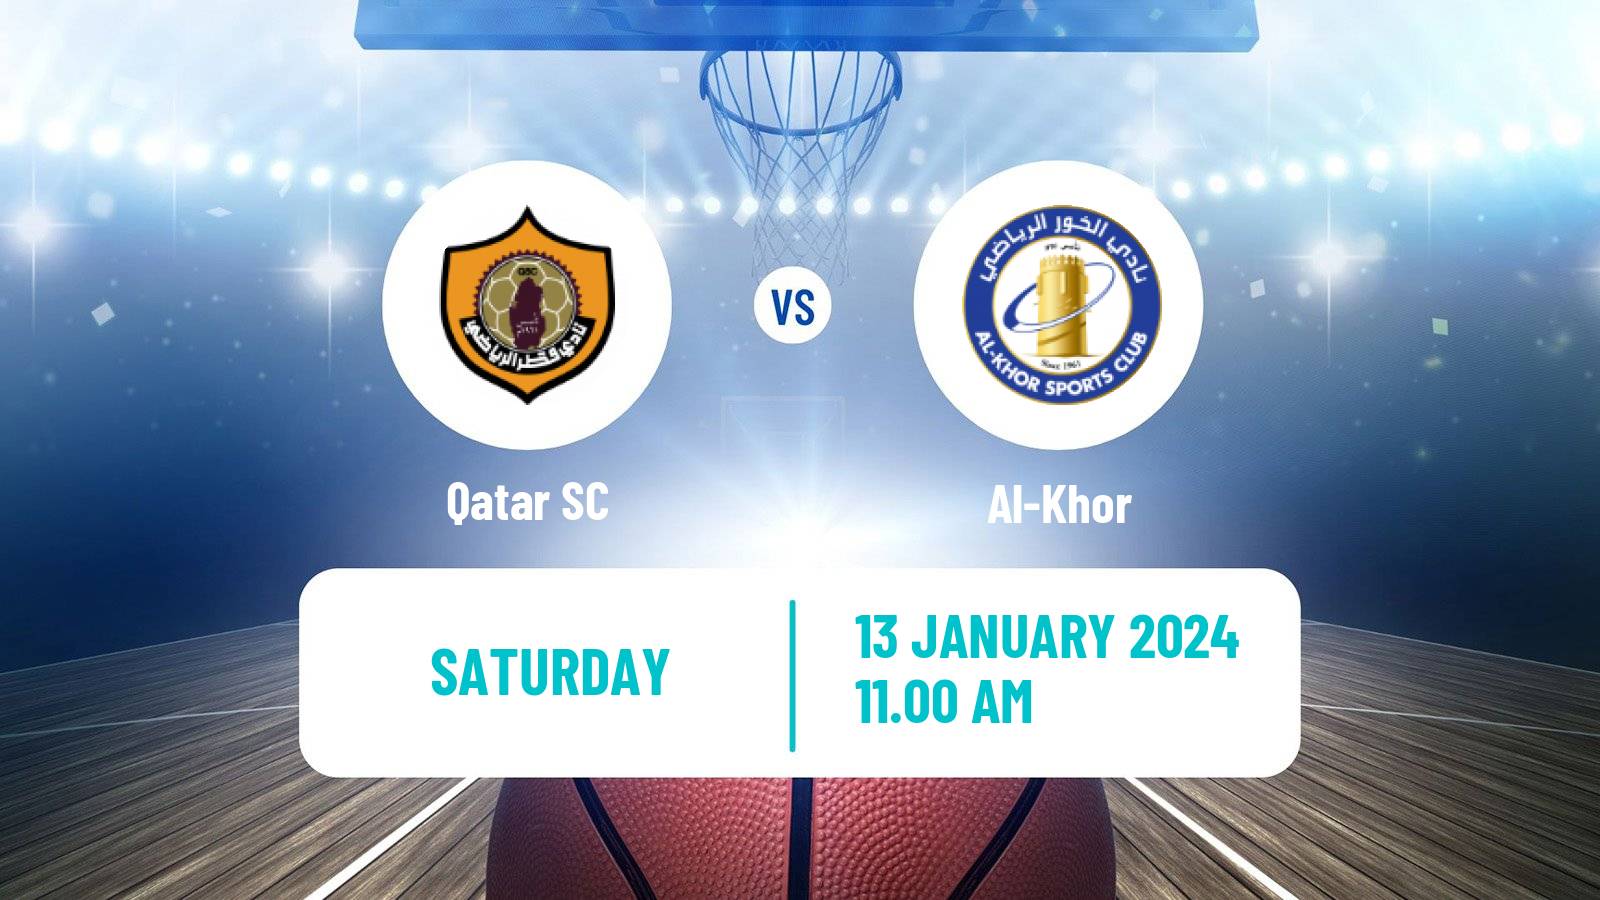 Basketball Qatar Basketball League Qatar SC - Al-Khor